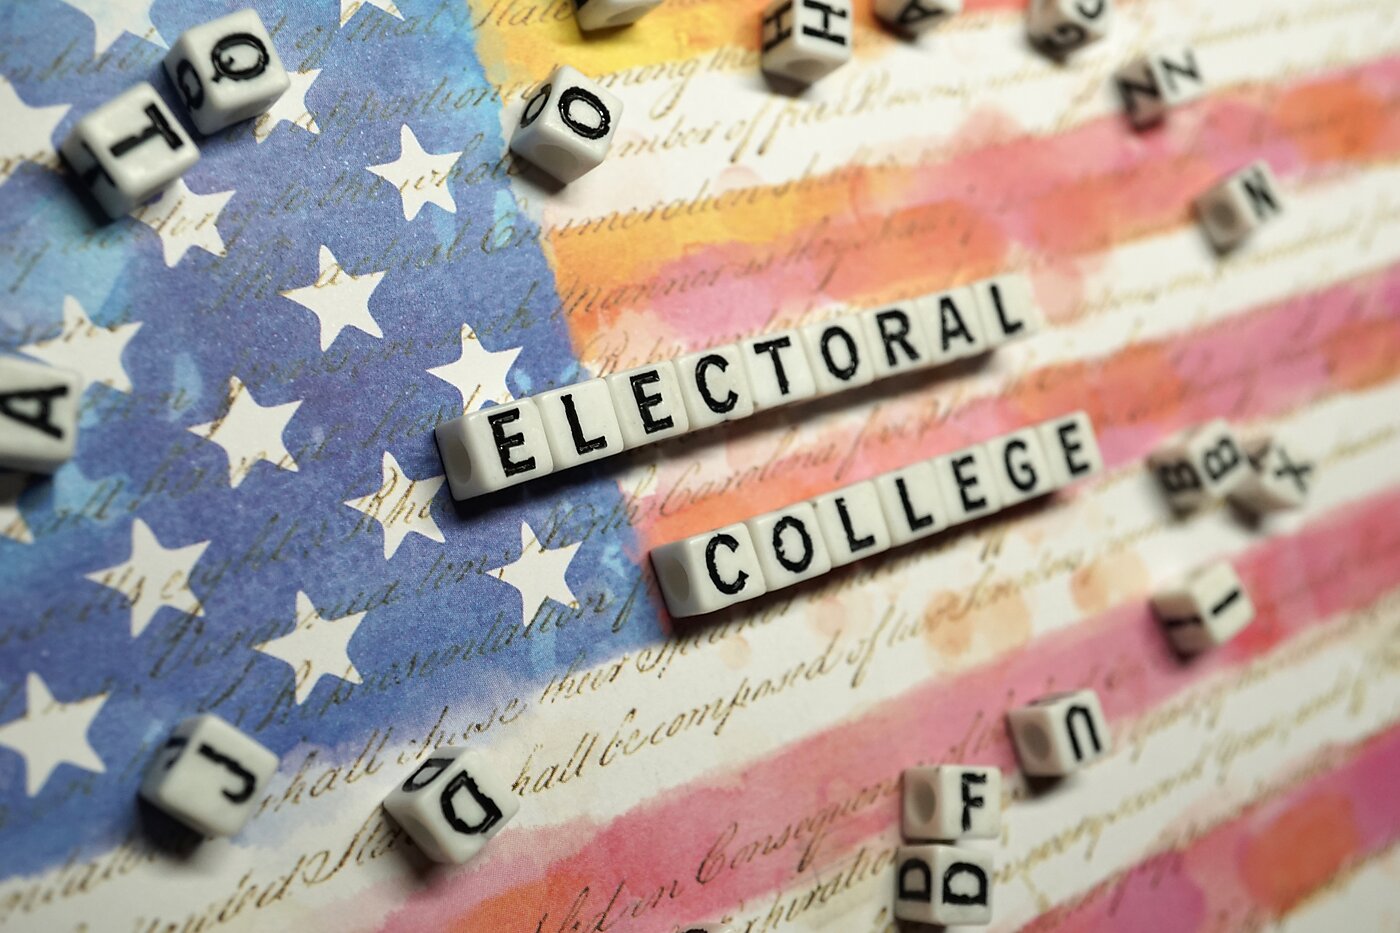 electoral college